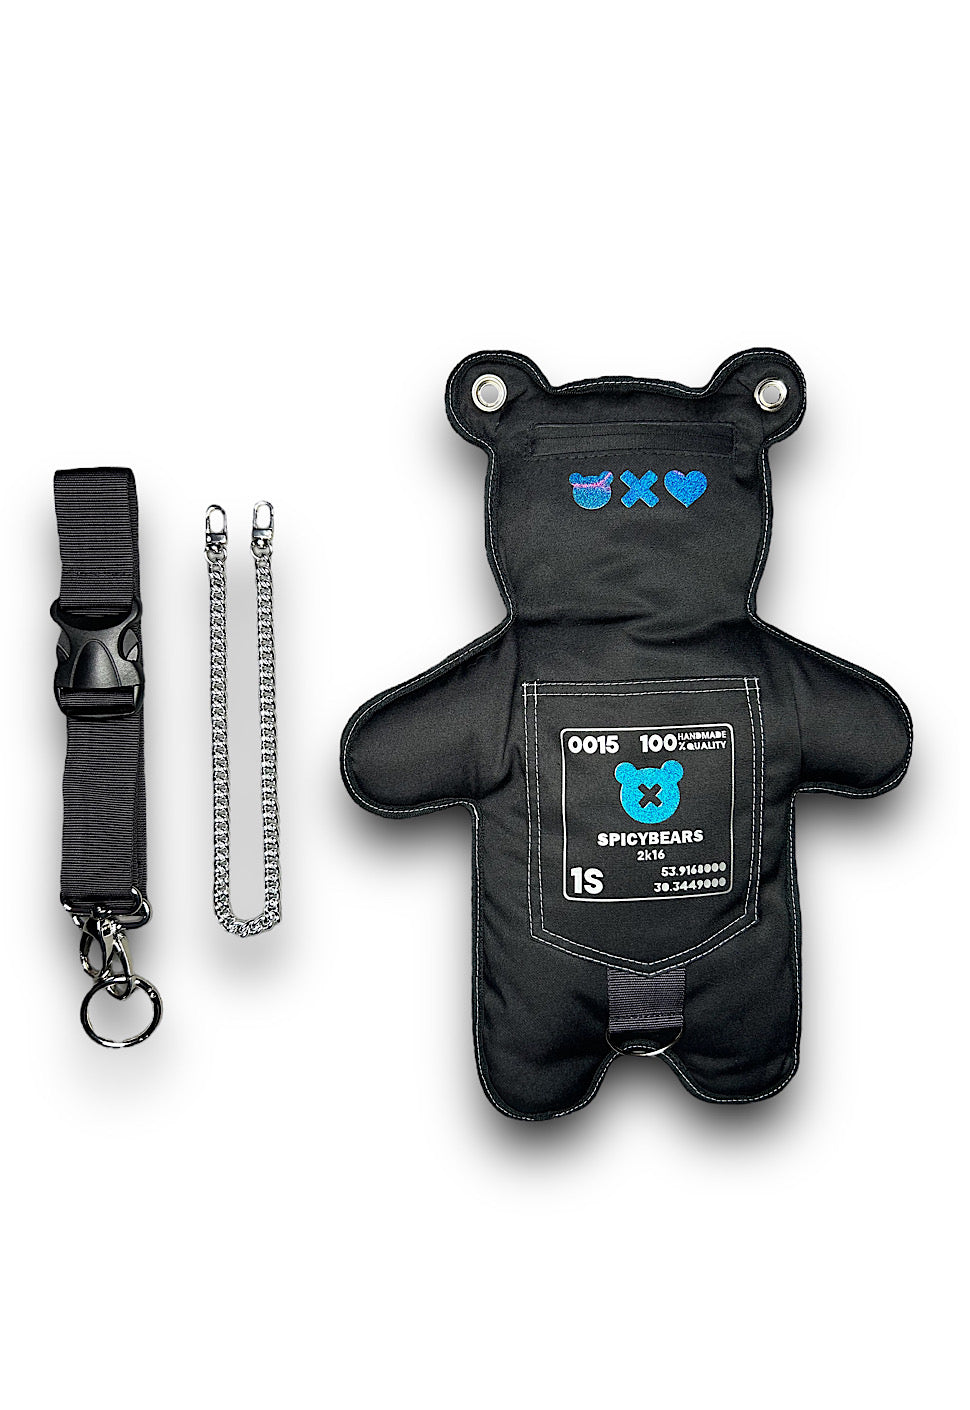 Sprayground Teddy Bear XRAY Anatomy Black Backpack Green Money Bear Bag  SALE | eBay